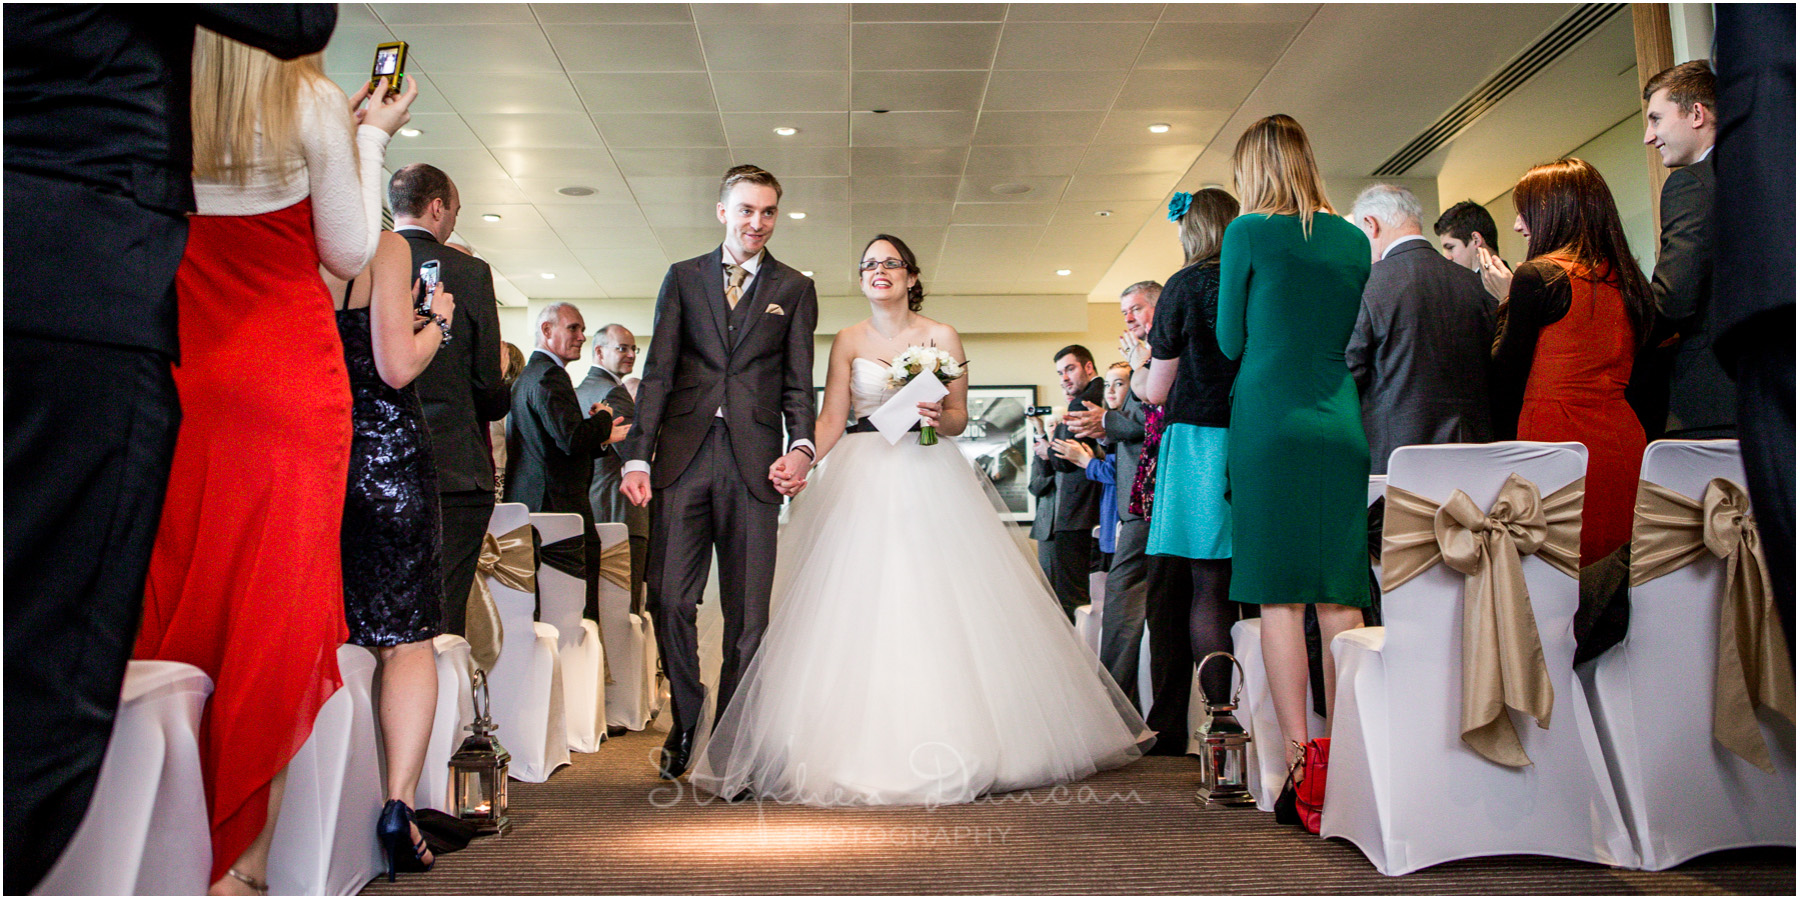 The Aviator wedding photography bride and groom walk down aisle